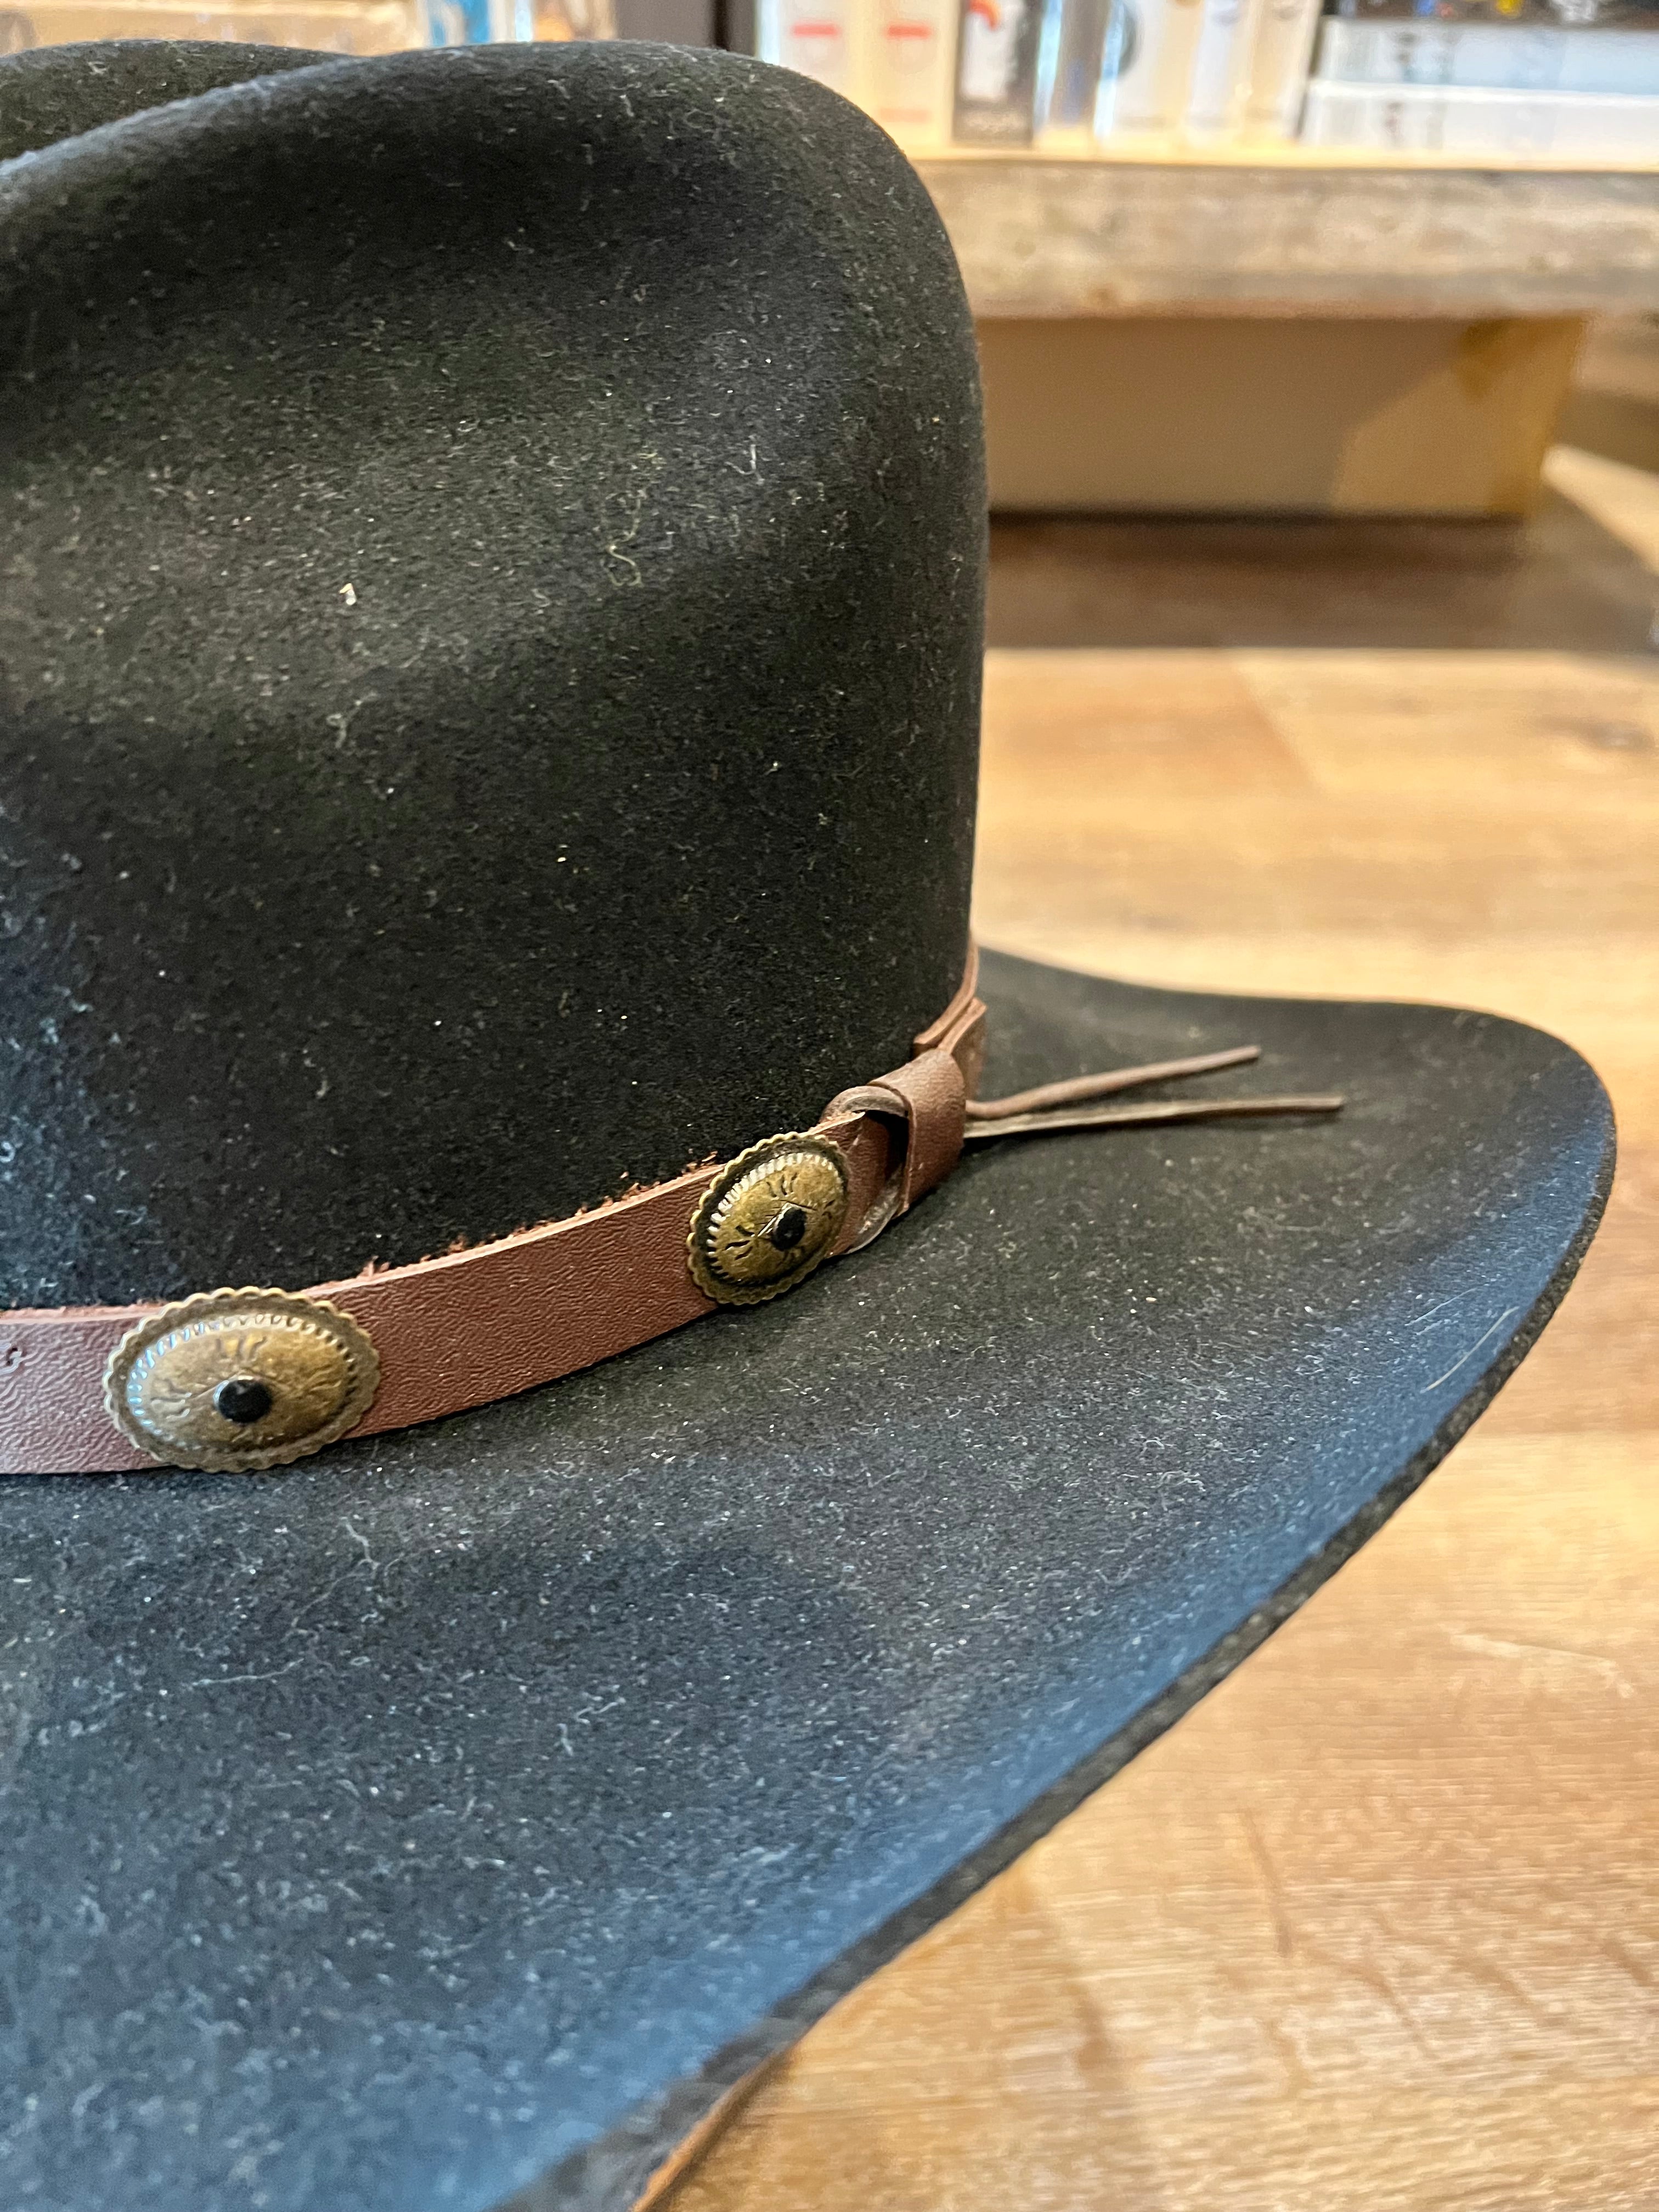 Bailey Tombstone Vintage Hat